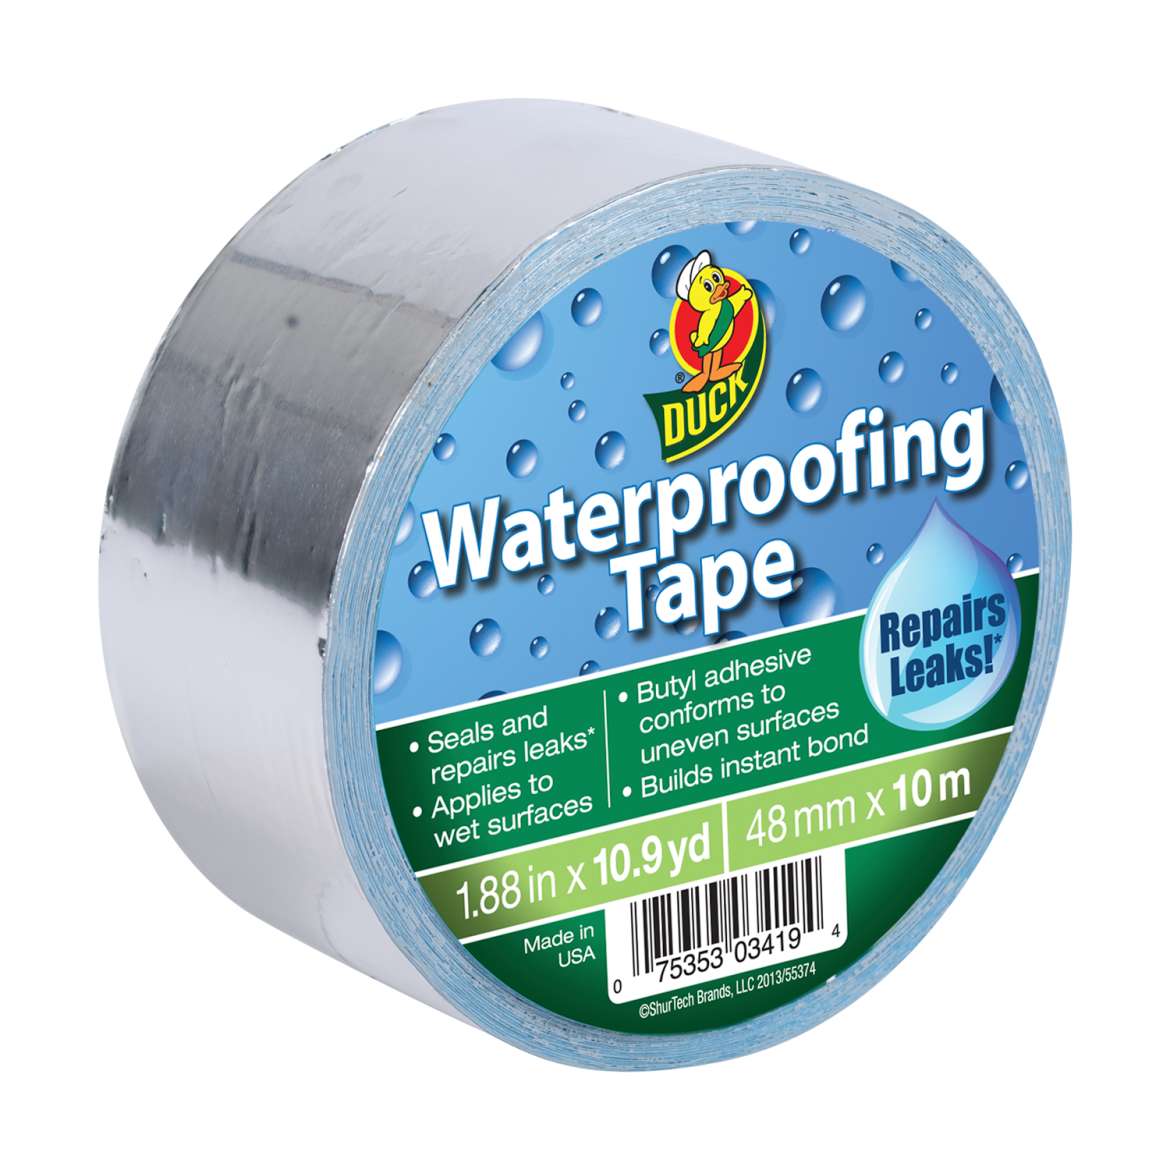 Using waterproof repair tape for sealing leaks